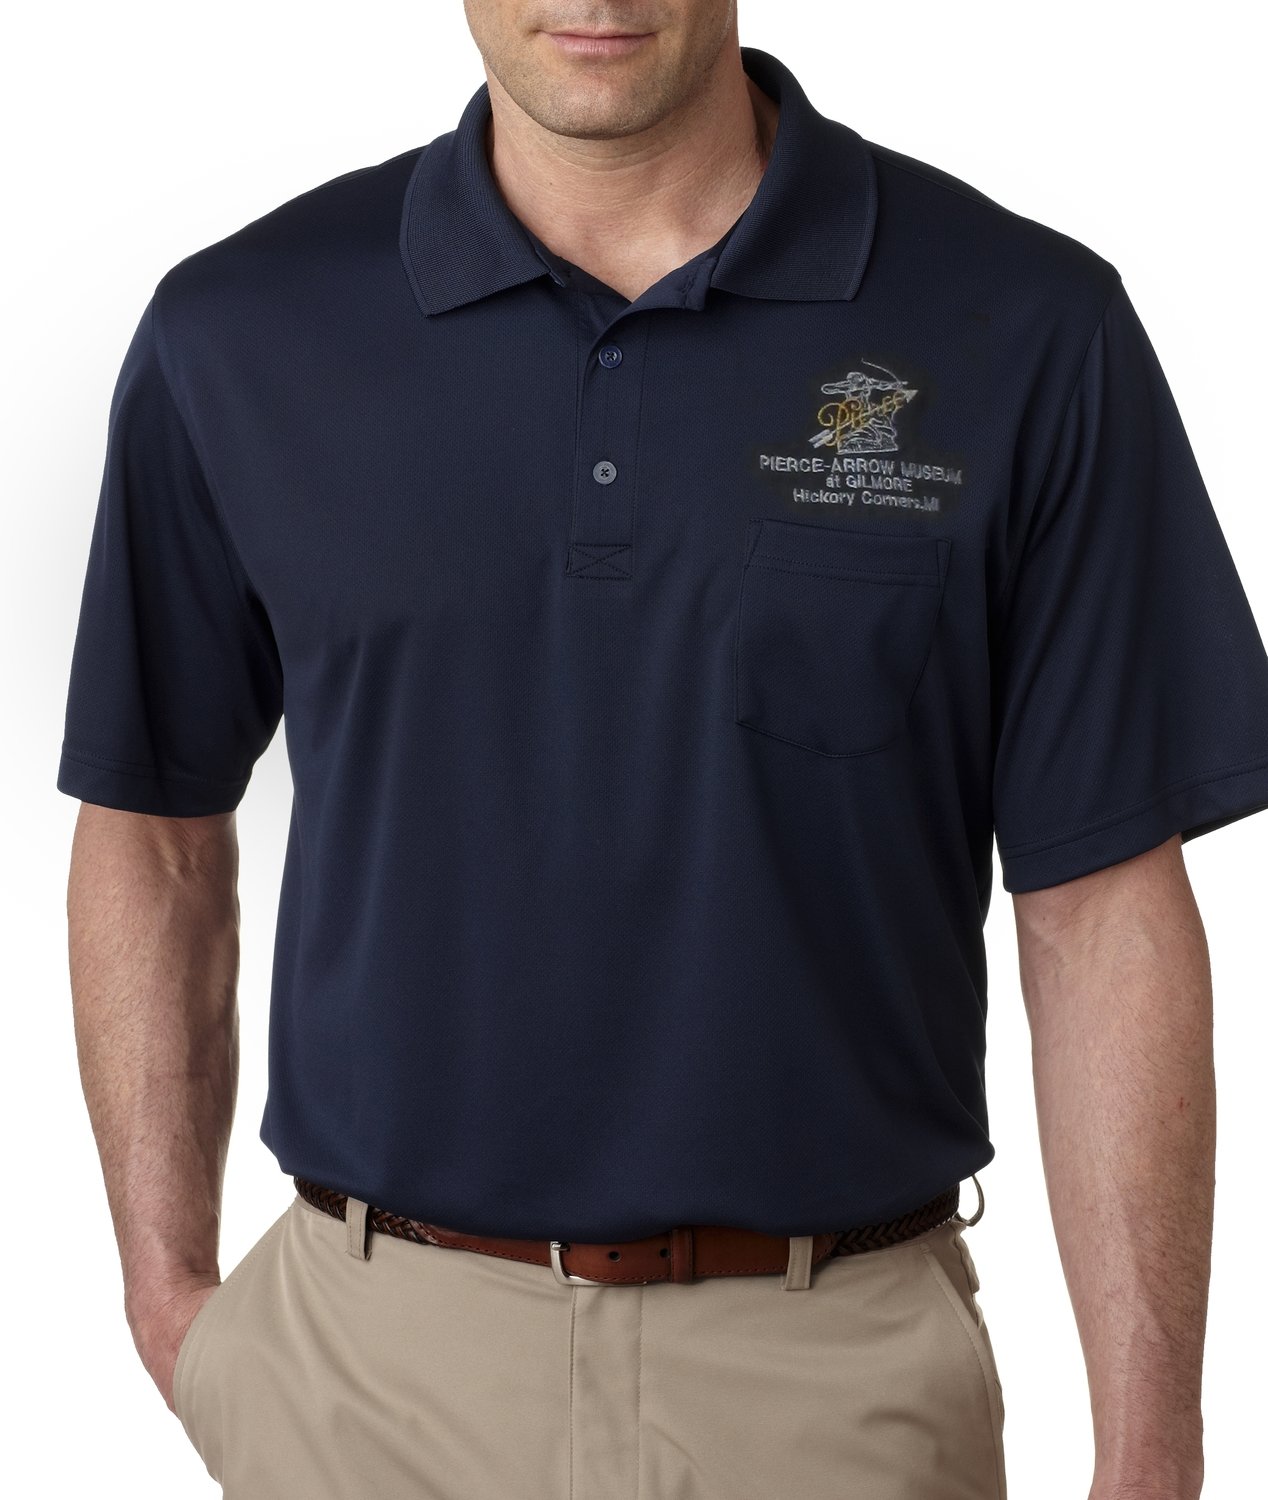 Pierce-Arrow Museum Men's Polo Shirt with pocket